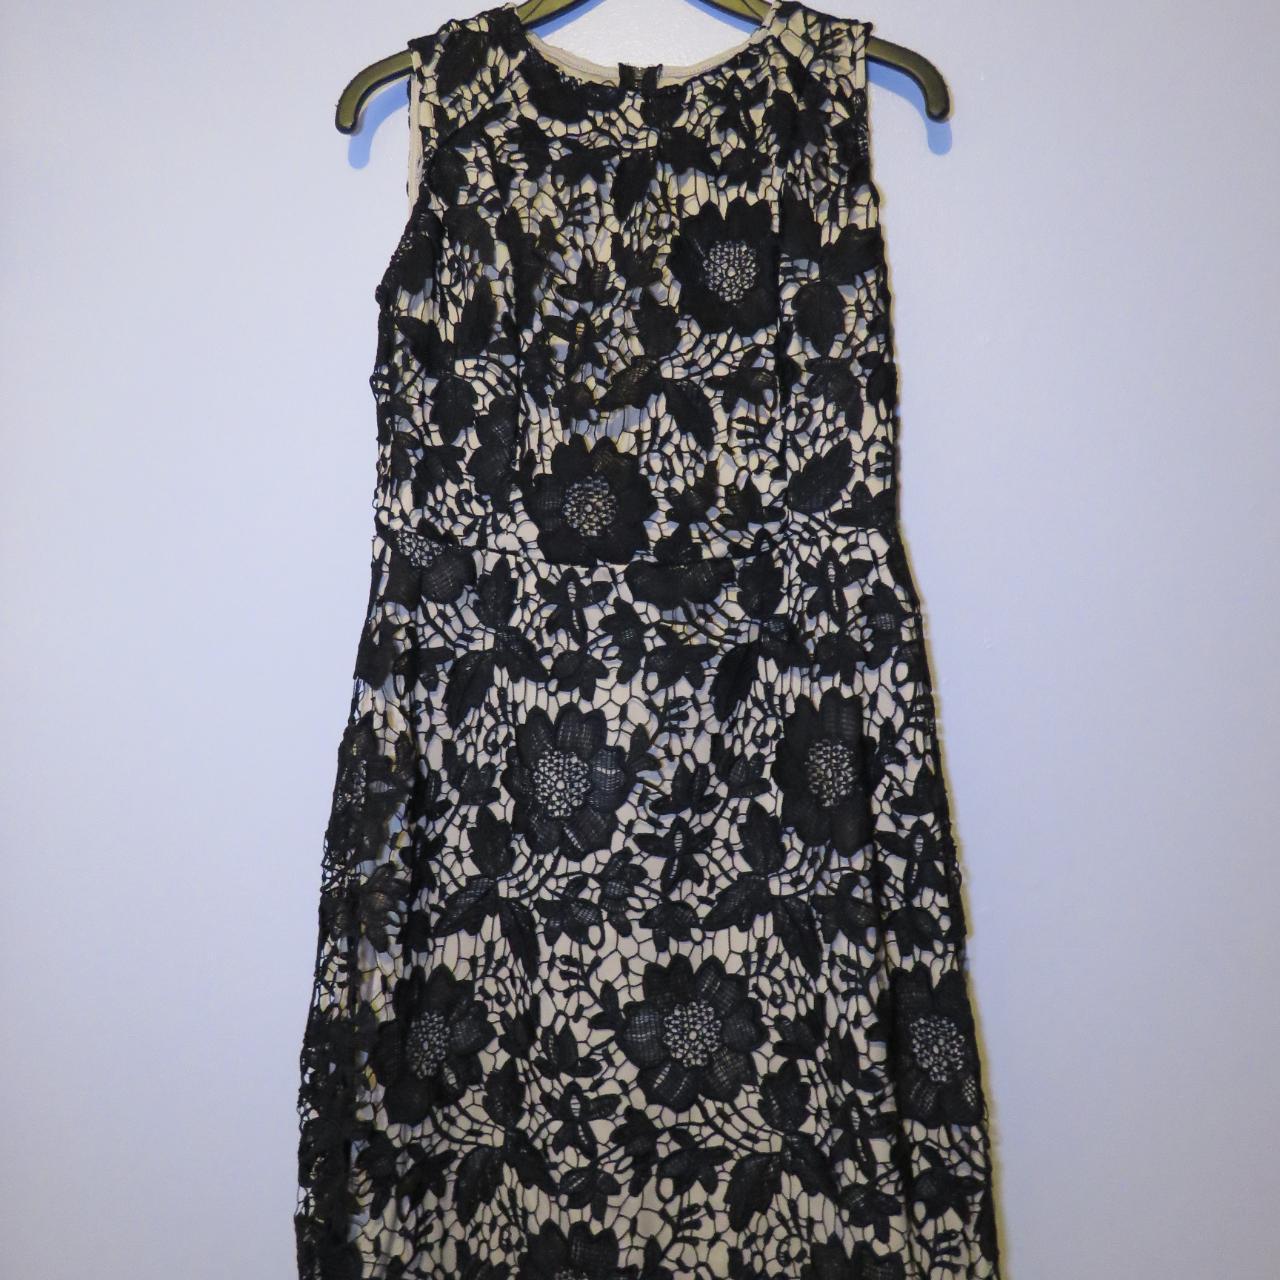 Sears Women's Black and Tan Dress | Depop